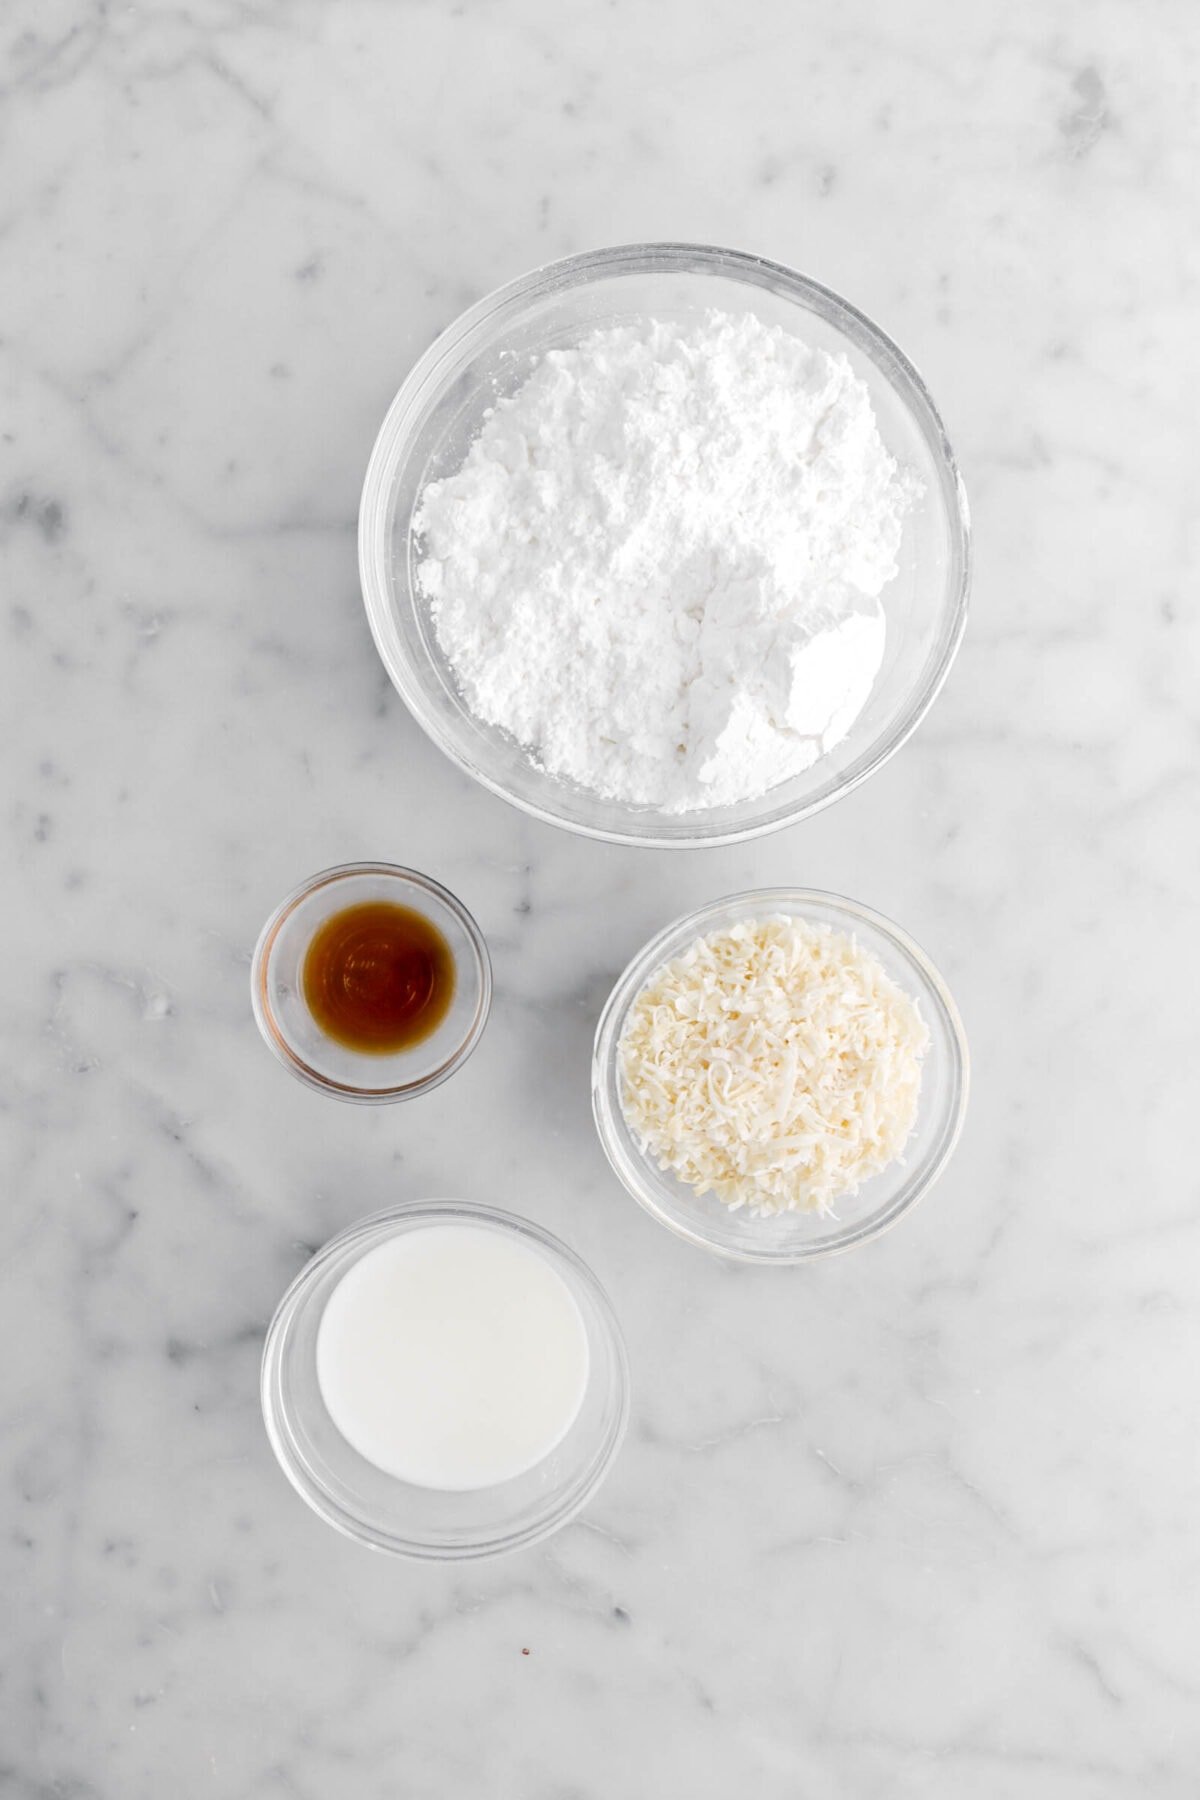 powdered sugar, vanilla, shredded coconut, and vanilla on marble surface.